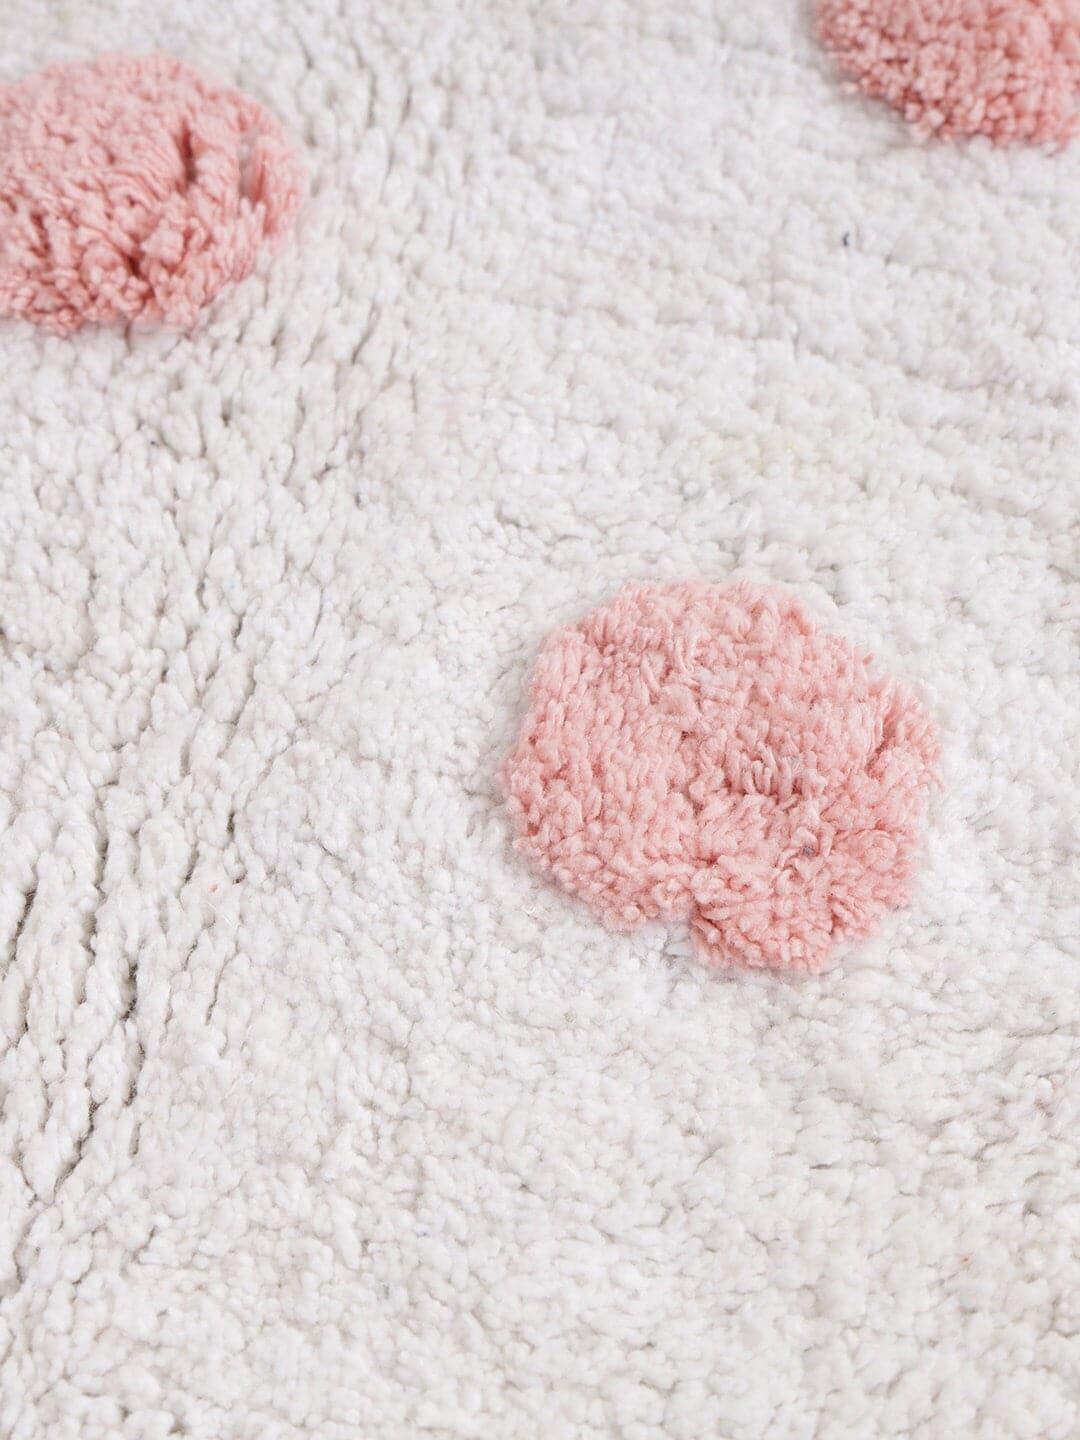 Pink White Heart Shaped Cotton Bath Rug Washable Bathroom – HITRUG